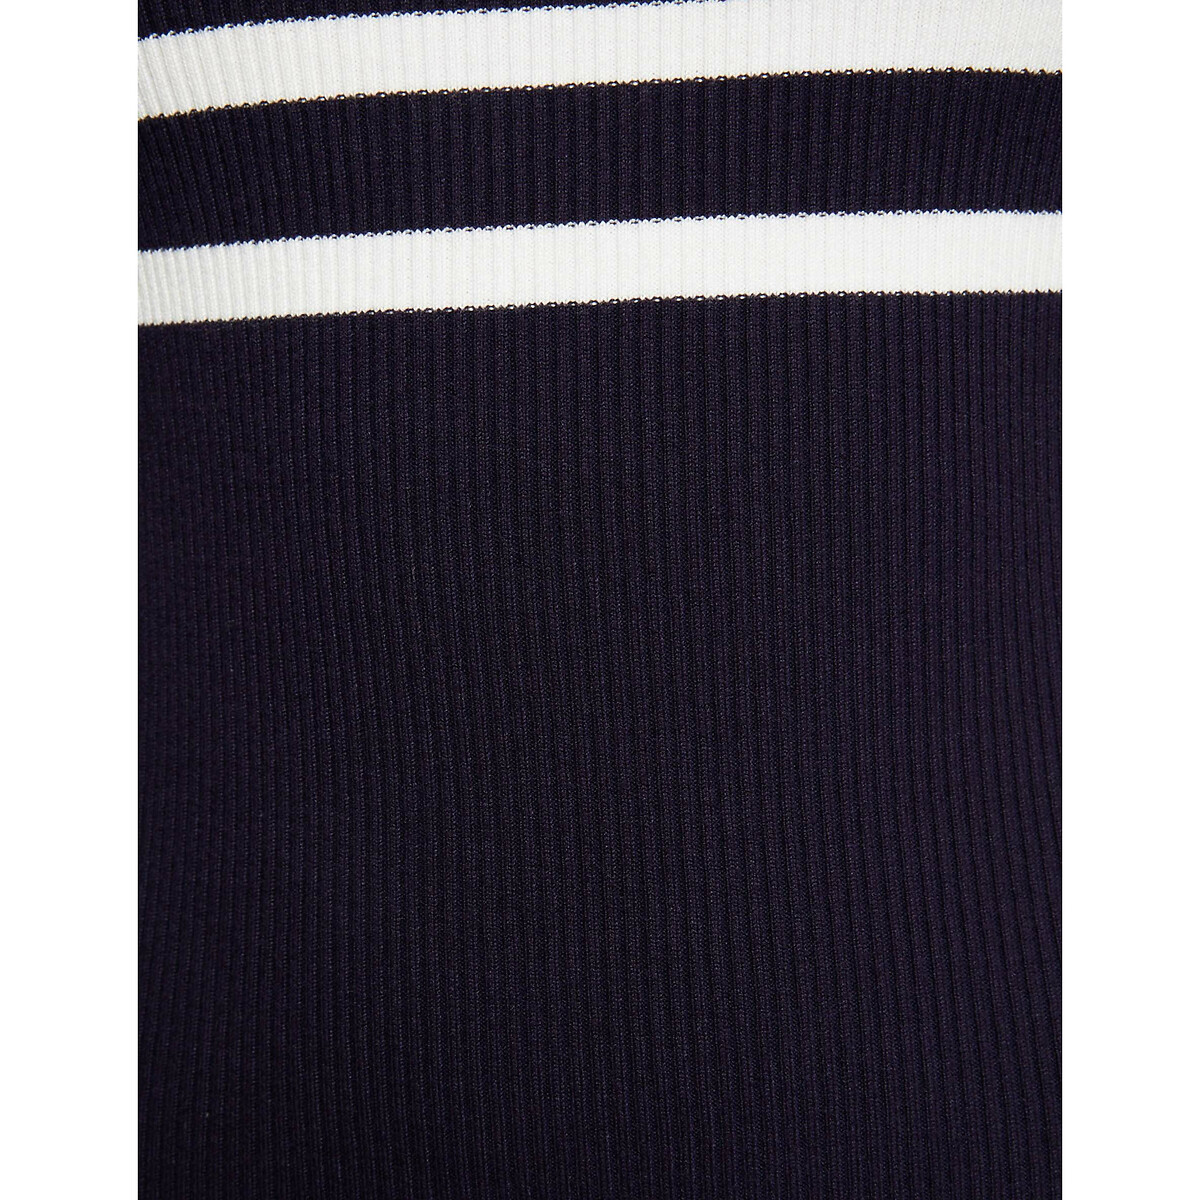 Платье-пуловер приталенное на пуговицах  S синий LaRedoute, размер S - фото 4